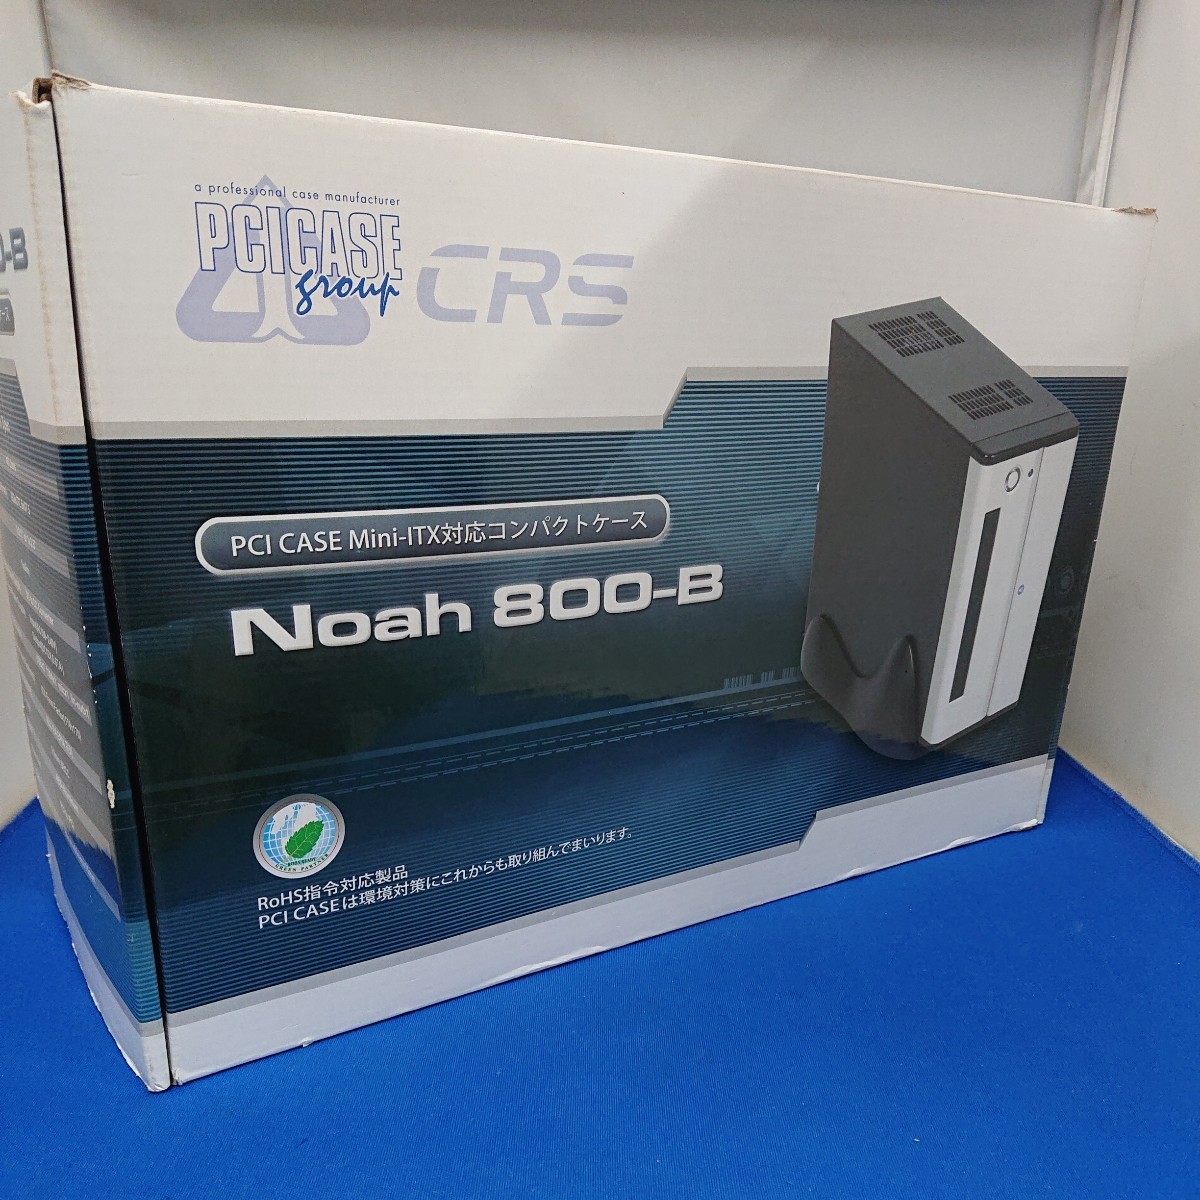 ★Diracディラック Noah 800-B Rev1.5 PCICase Mini-ITX対応コンパクトケース HD-Audio対応 パソコン パーツ 縦 横 兼 シルバー/ブラック★_画像9